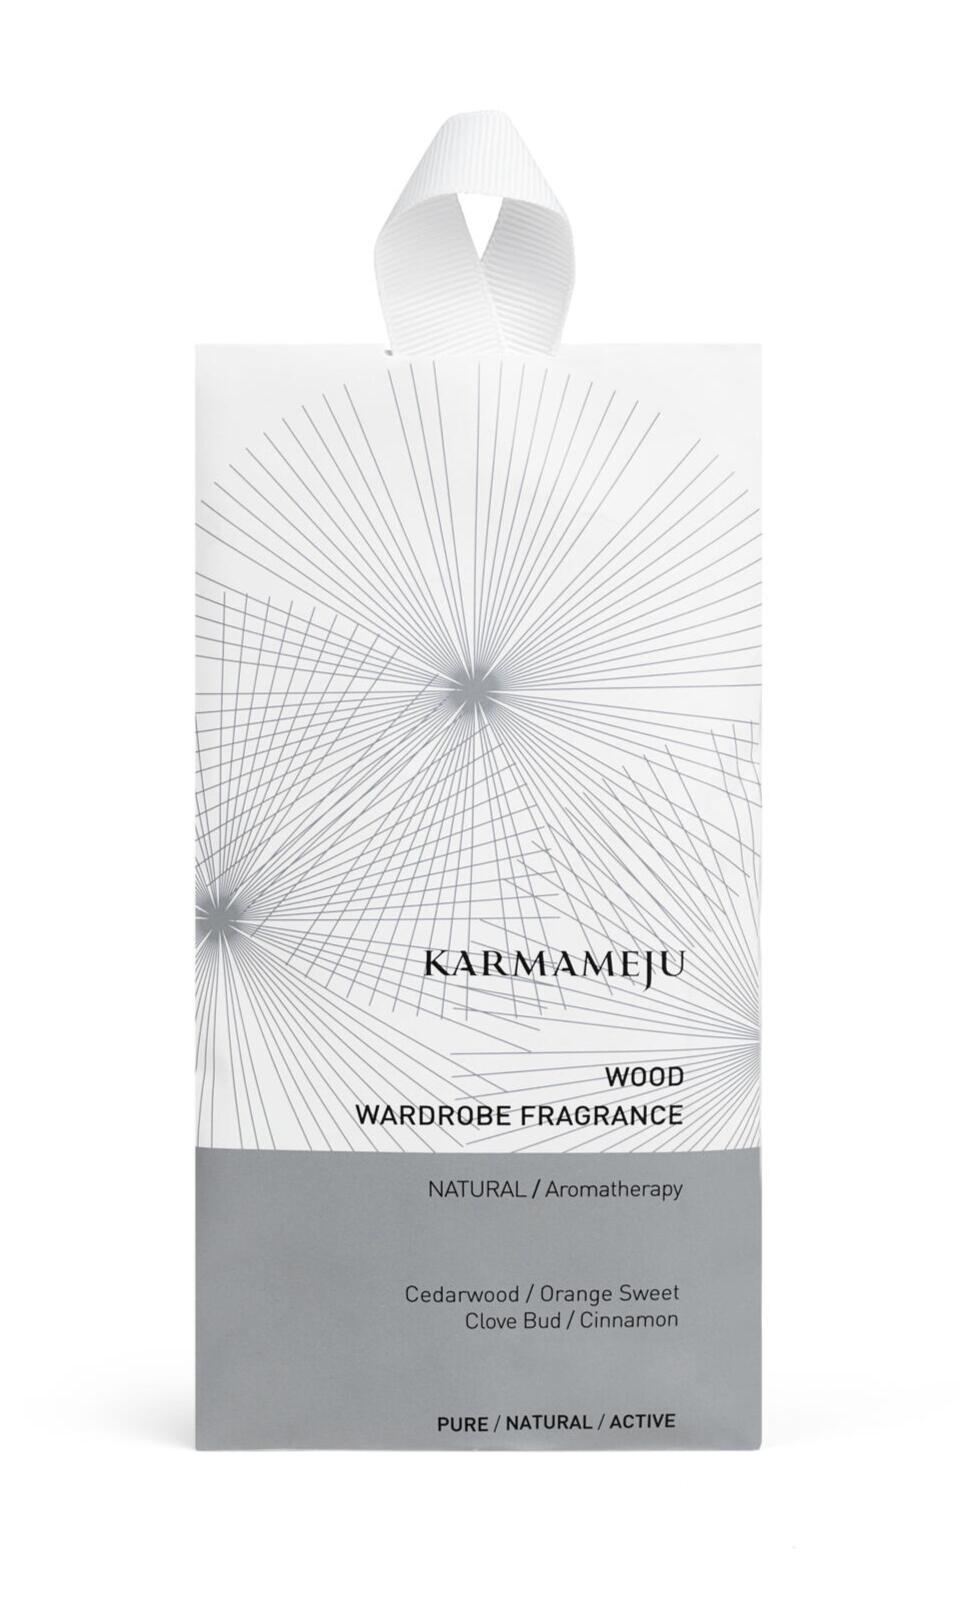 Se Karmameju wood wardrobe fragrance hos Ren-velvaereshop.dk